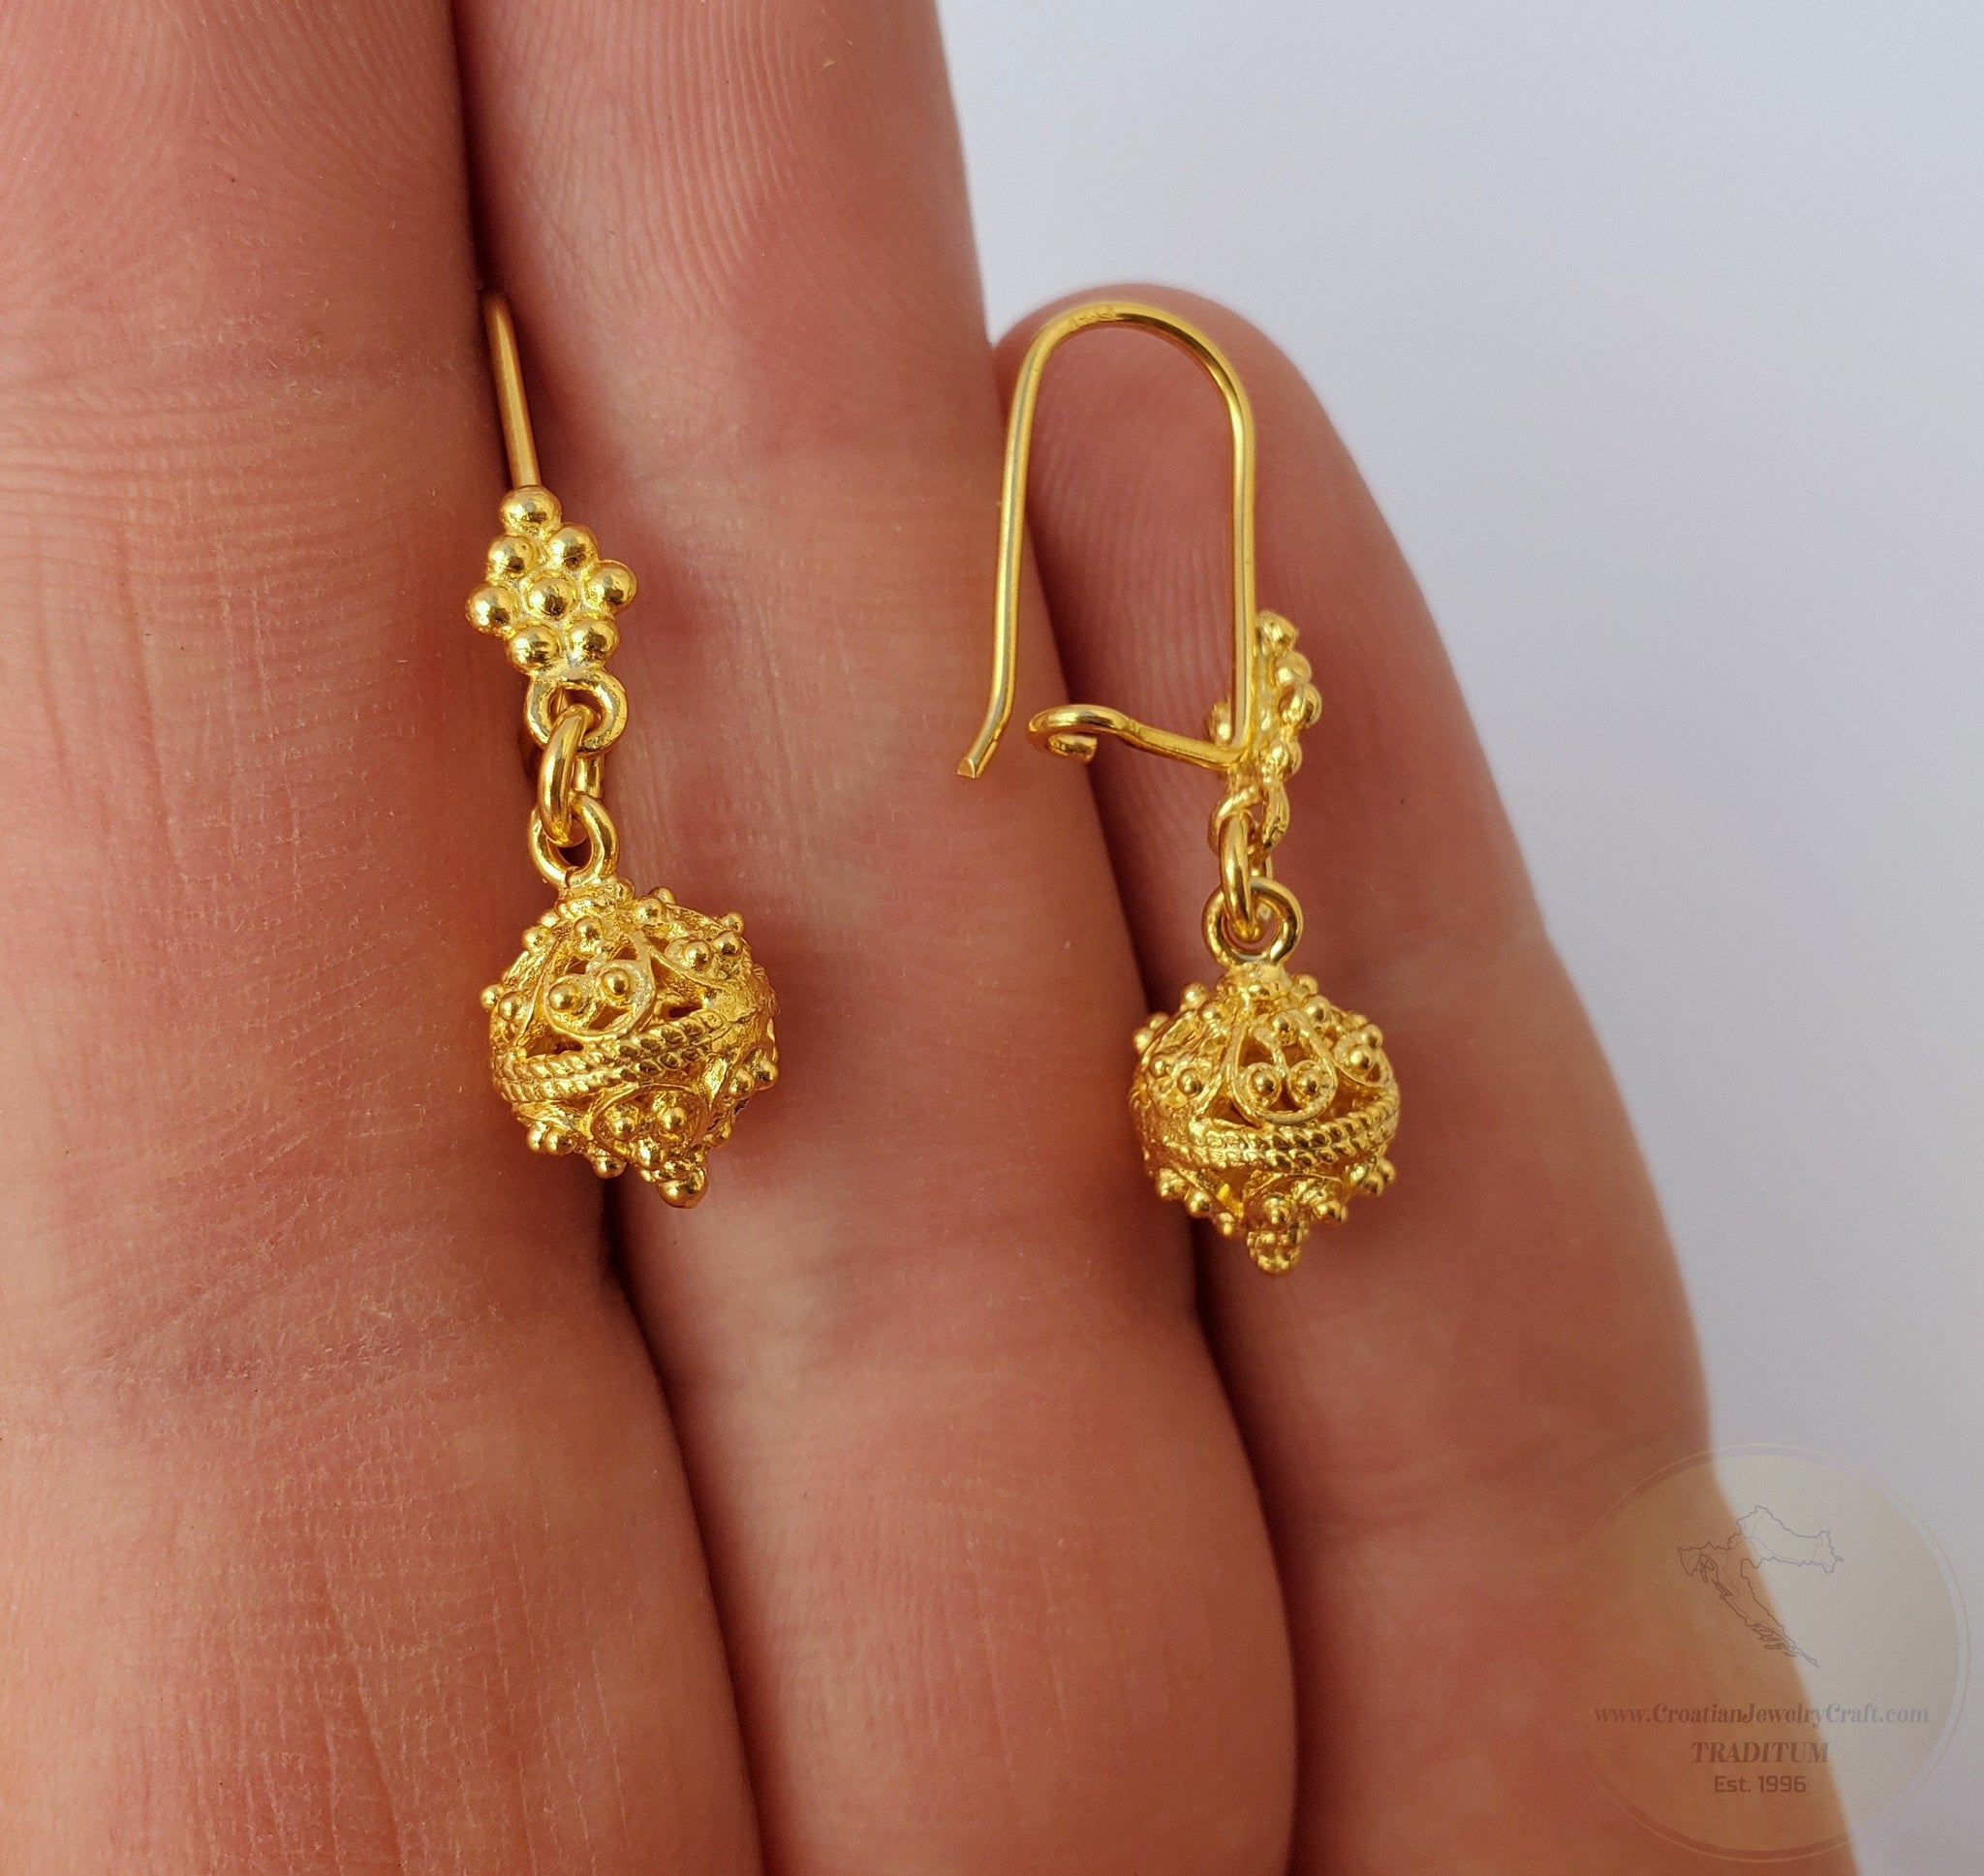 14k Yellow Gold Small Twisted Circle Shepherd Hook Earrings PRE876 | eBay